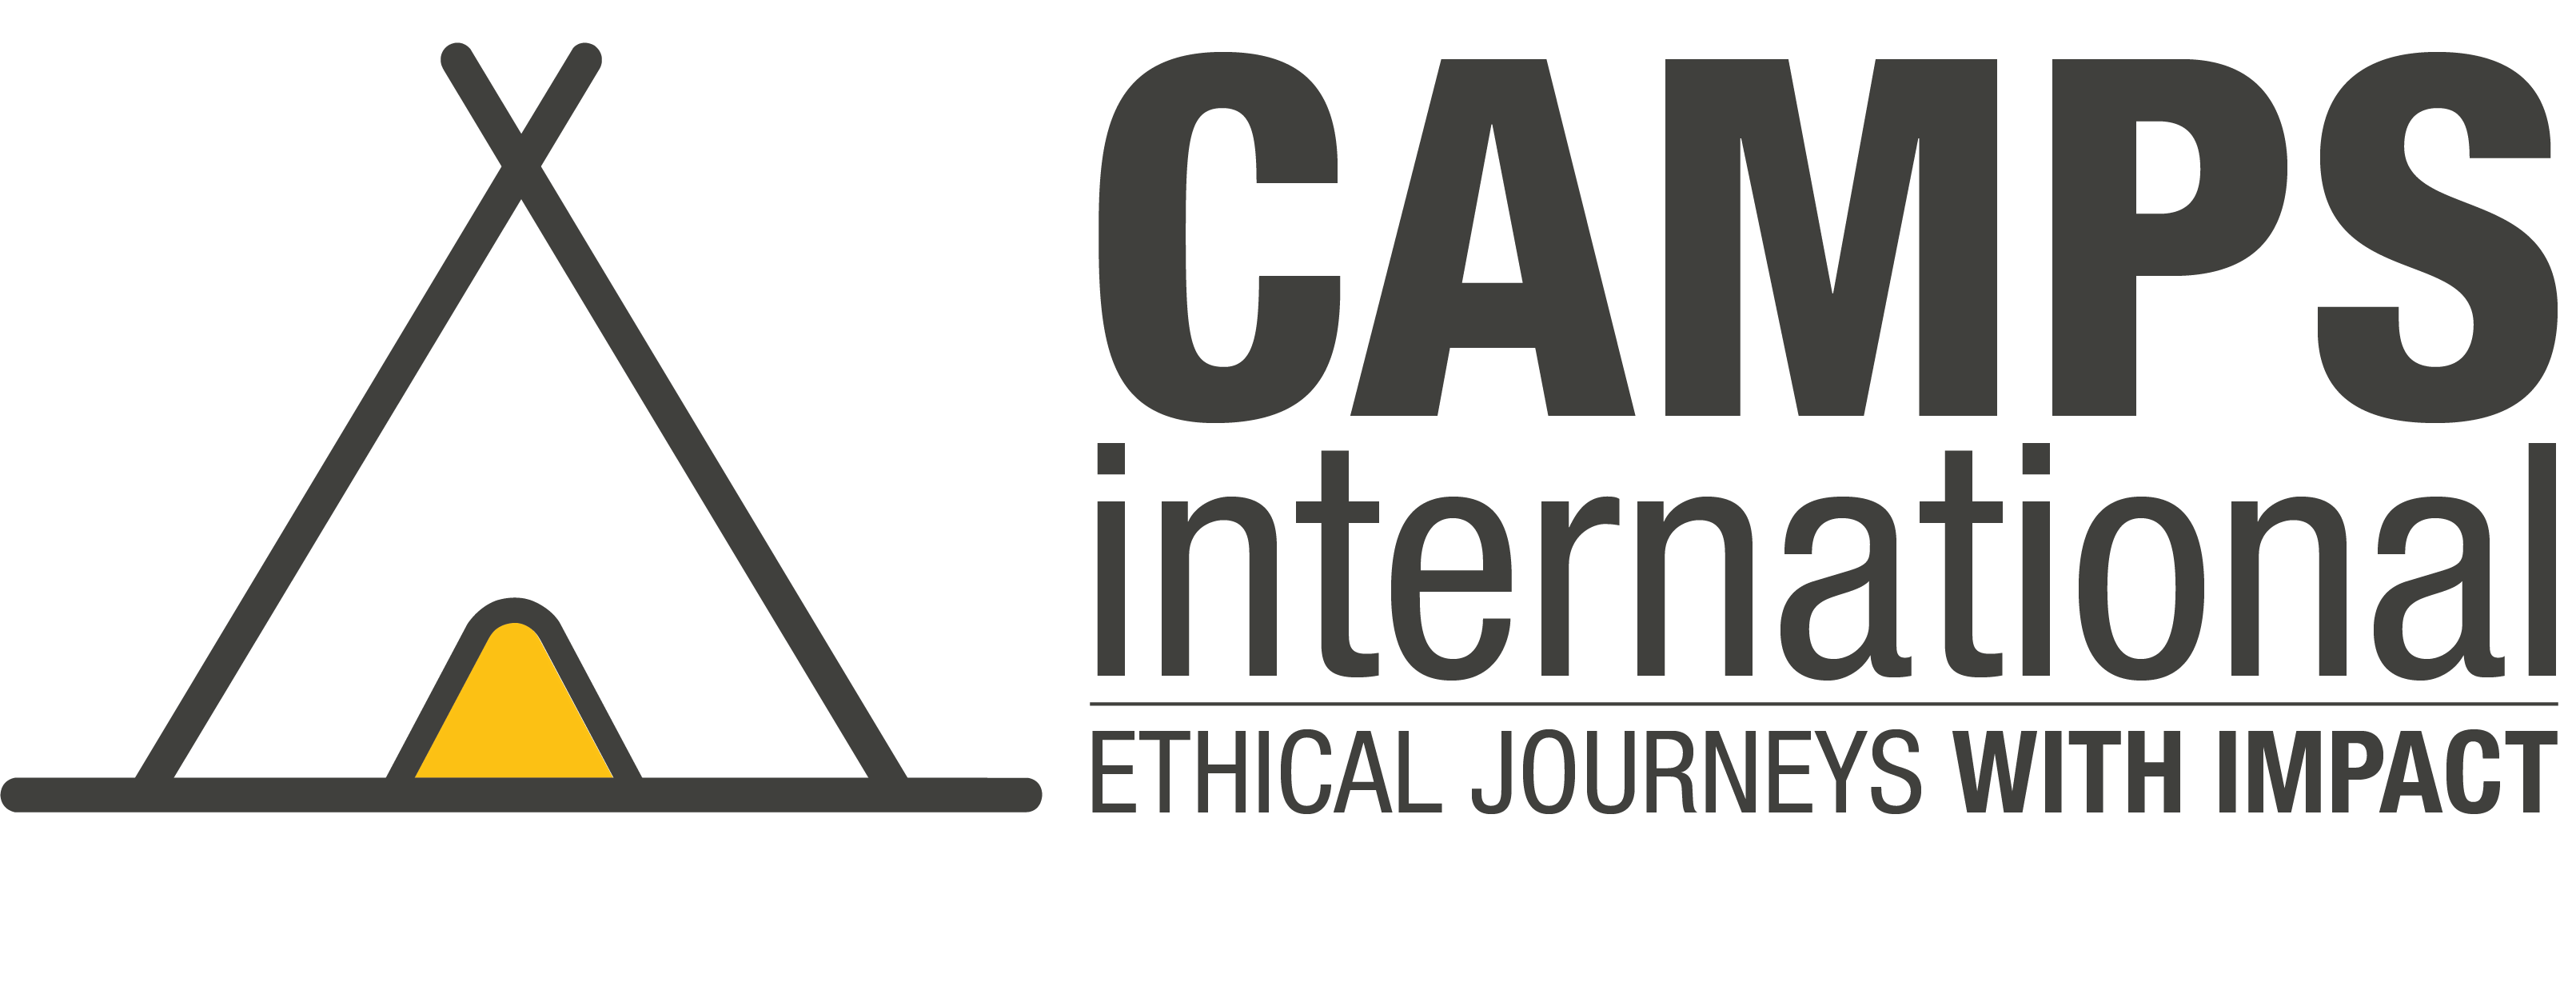 Camps International AUS logo